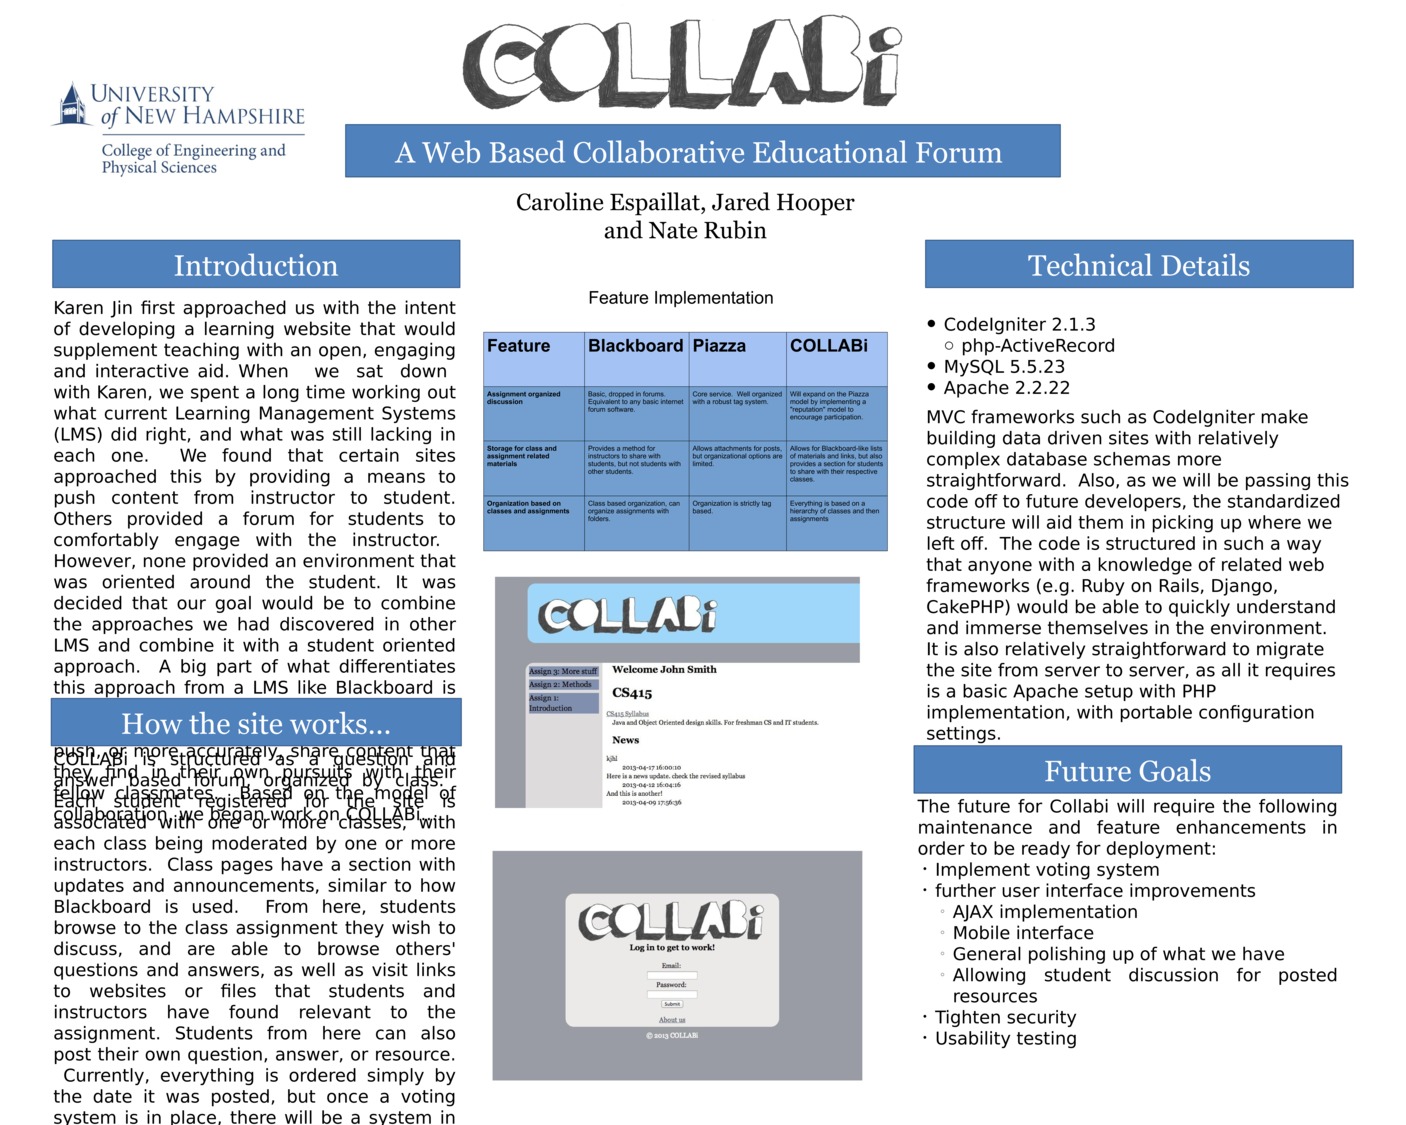 Collabi: A Web Based Collaborative Educational Forum  by nrubin